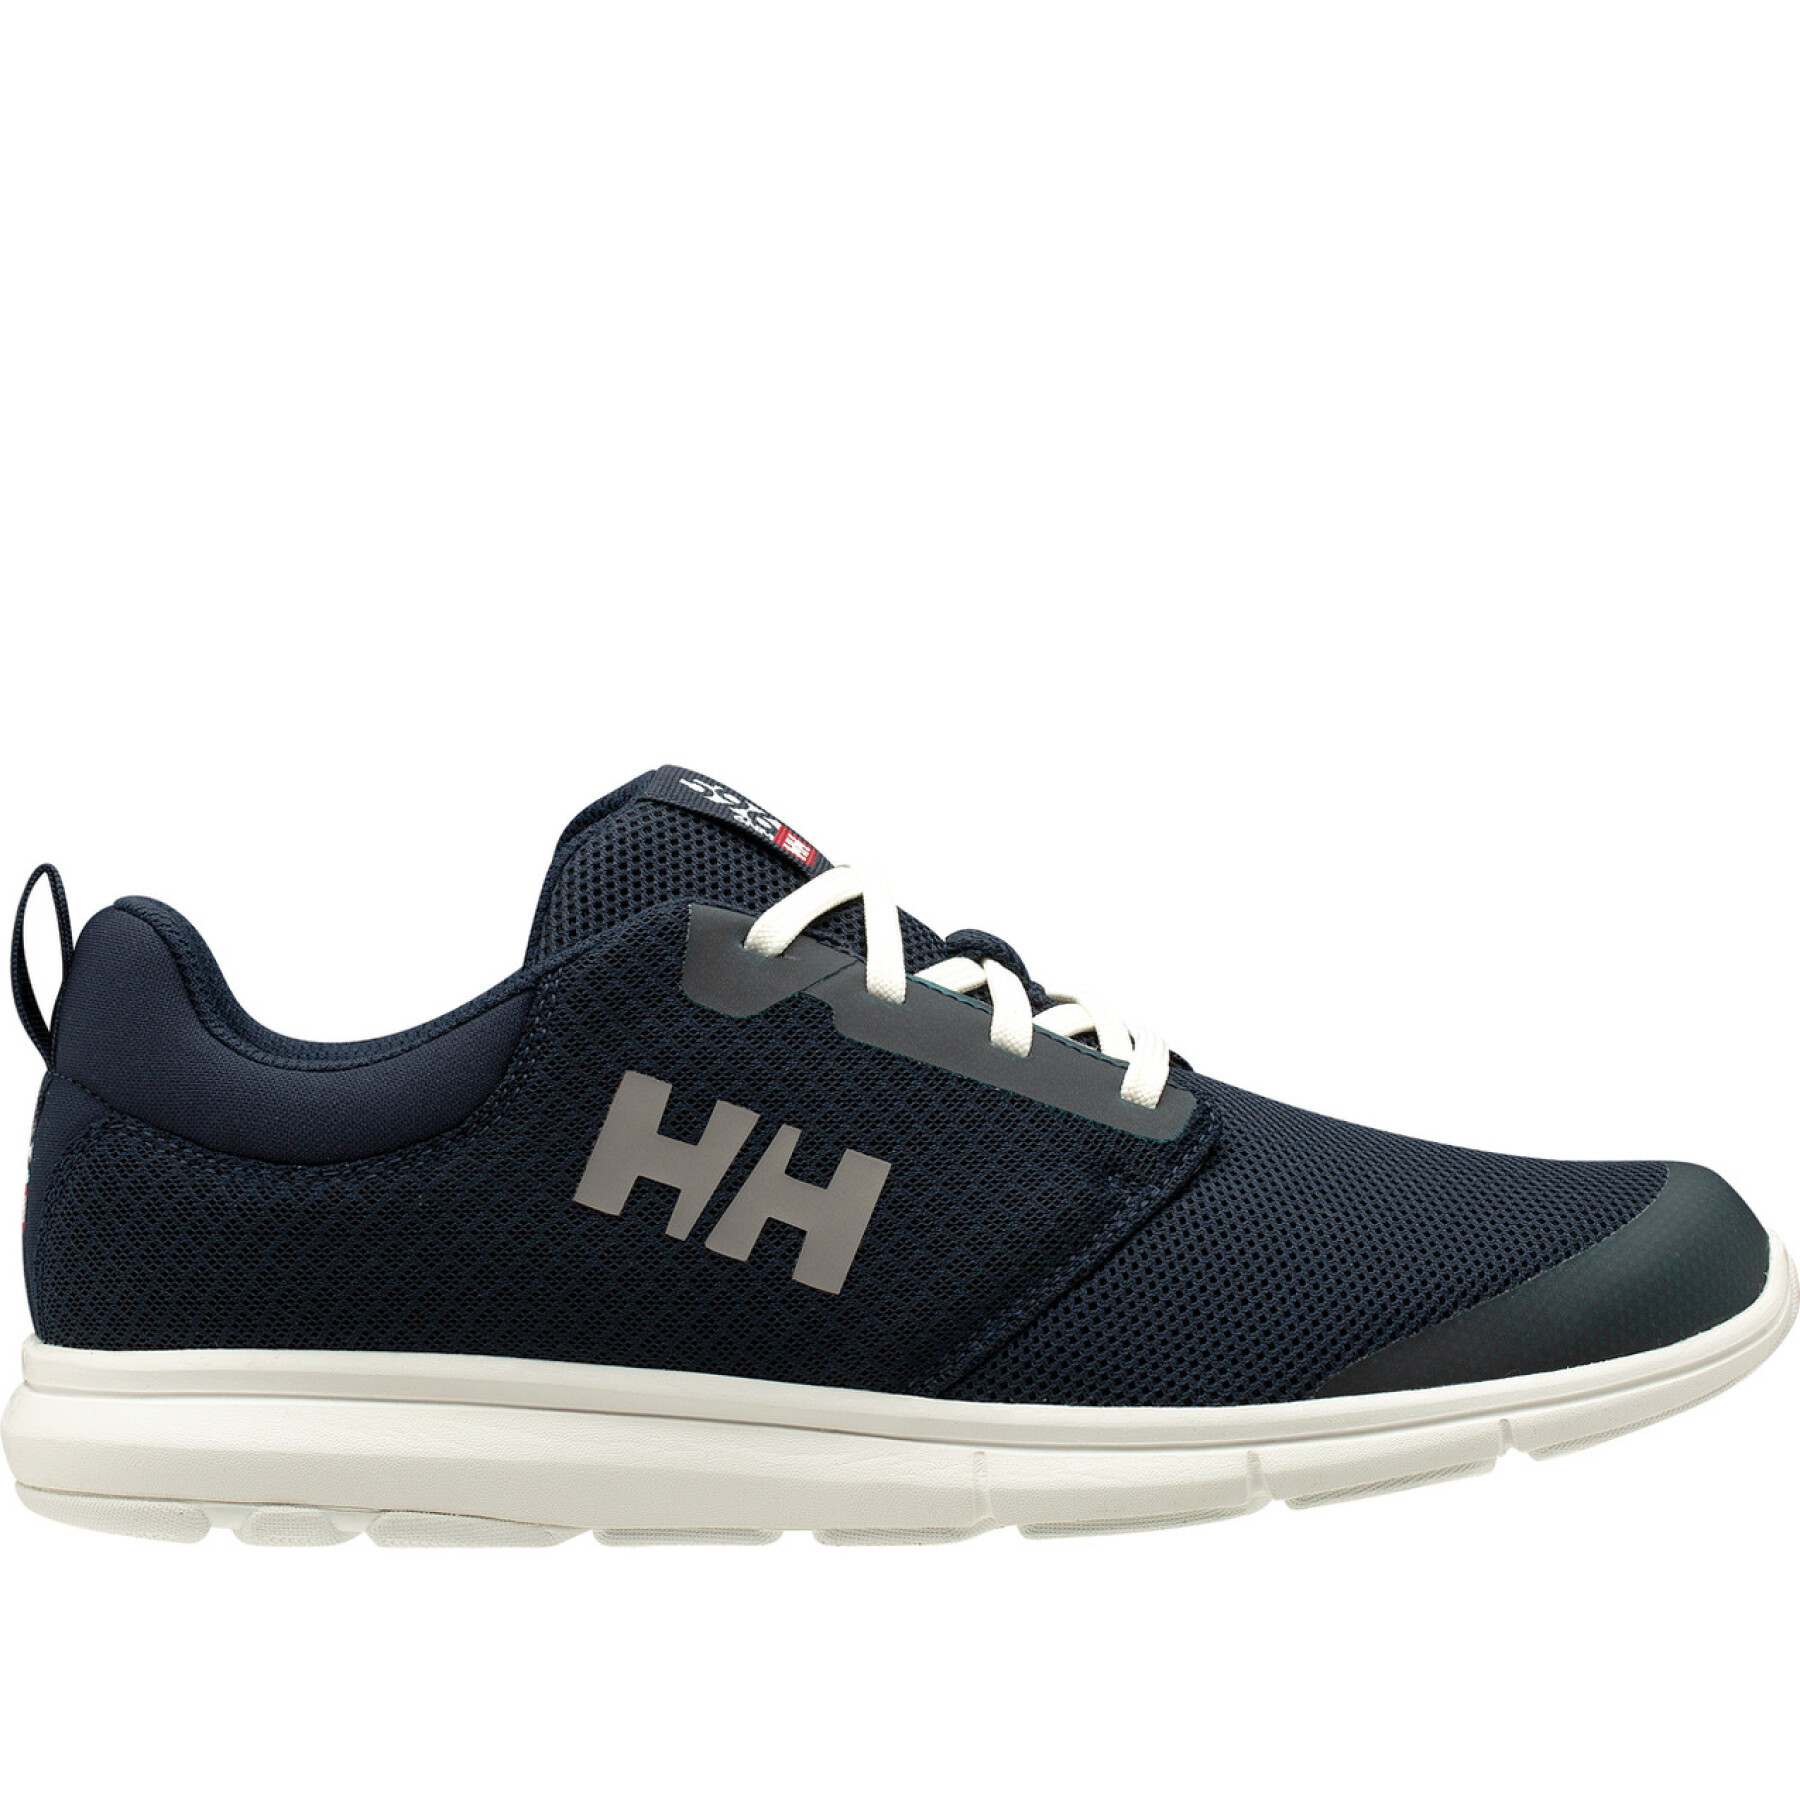 Chaussures de marche Helly Hansen Feathering